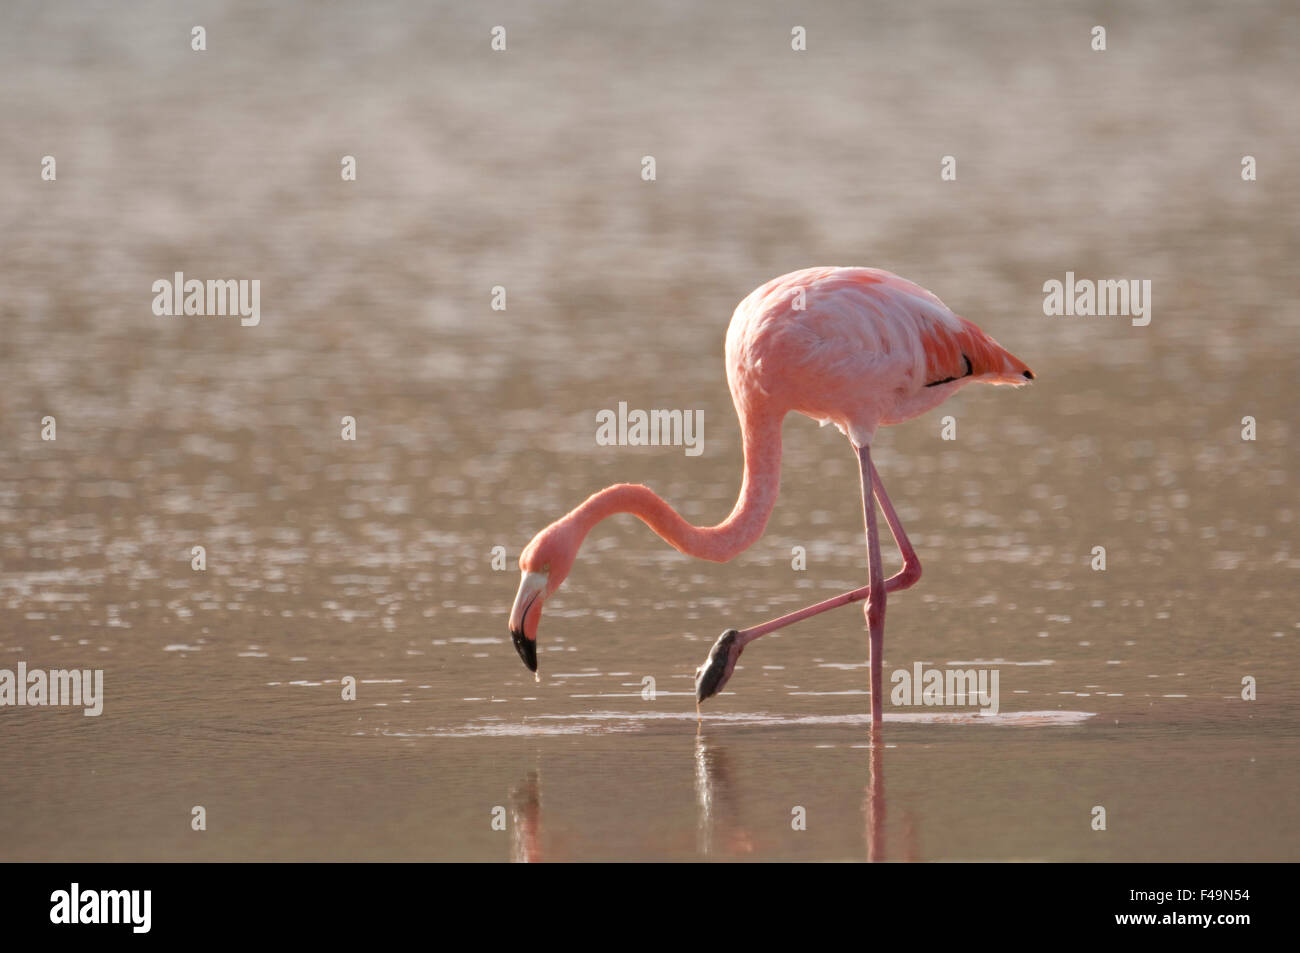 Flamingo on Santa Cruz Island, Galapagos Islands, Ecuador. Stock Photo